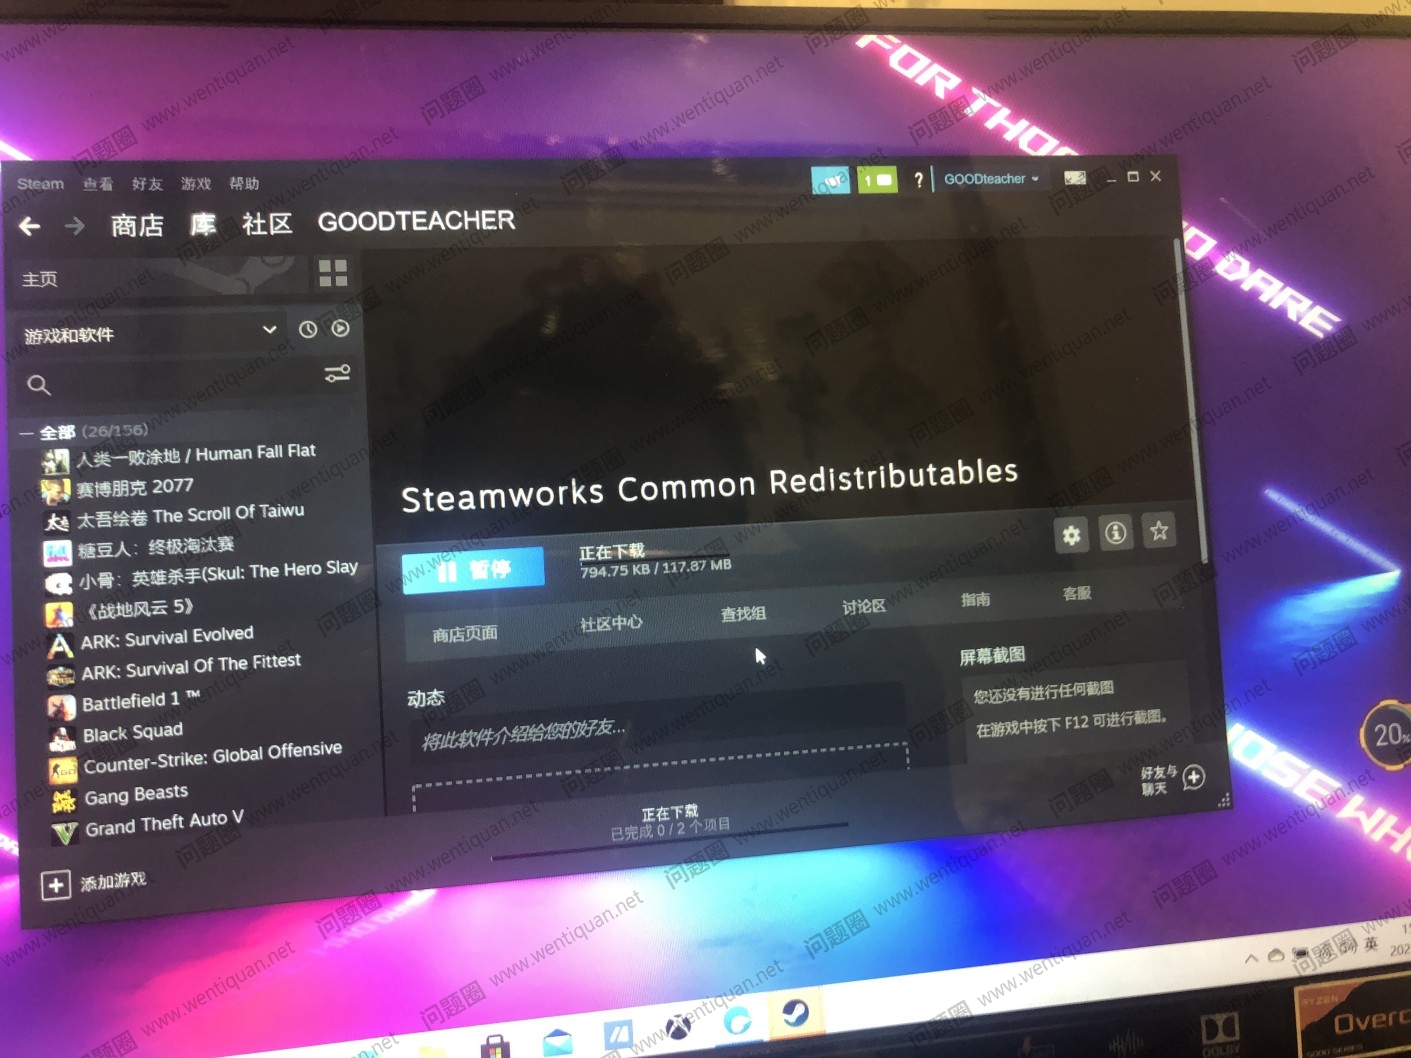 steamworks common redistributables keeps downloading